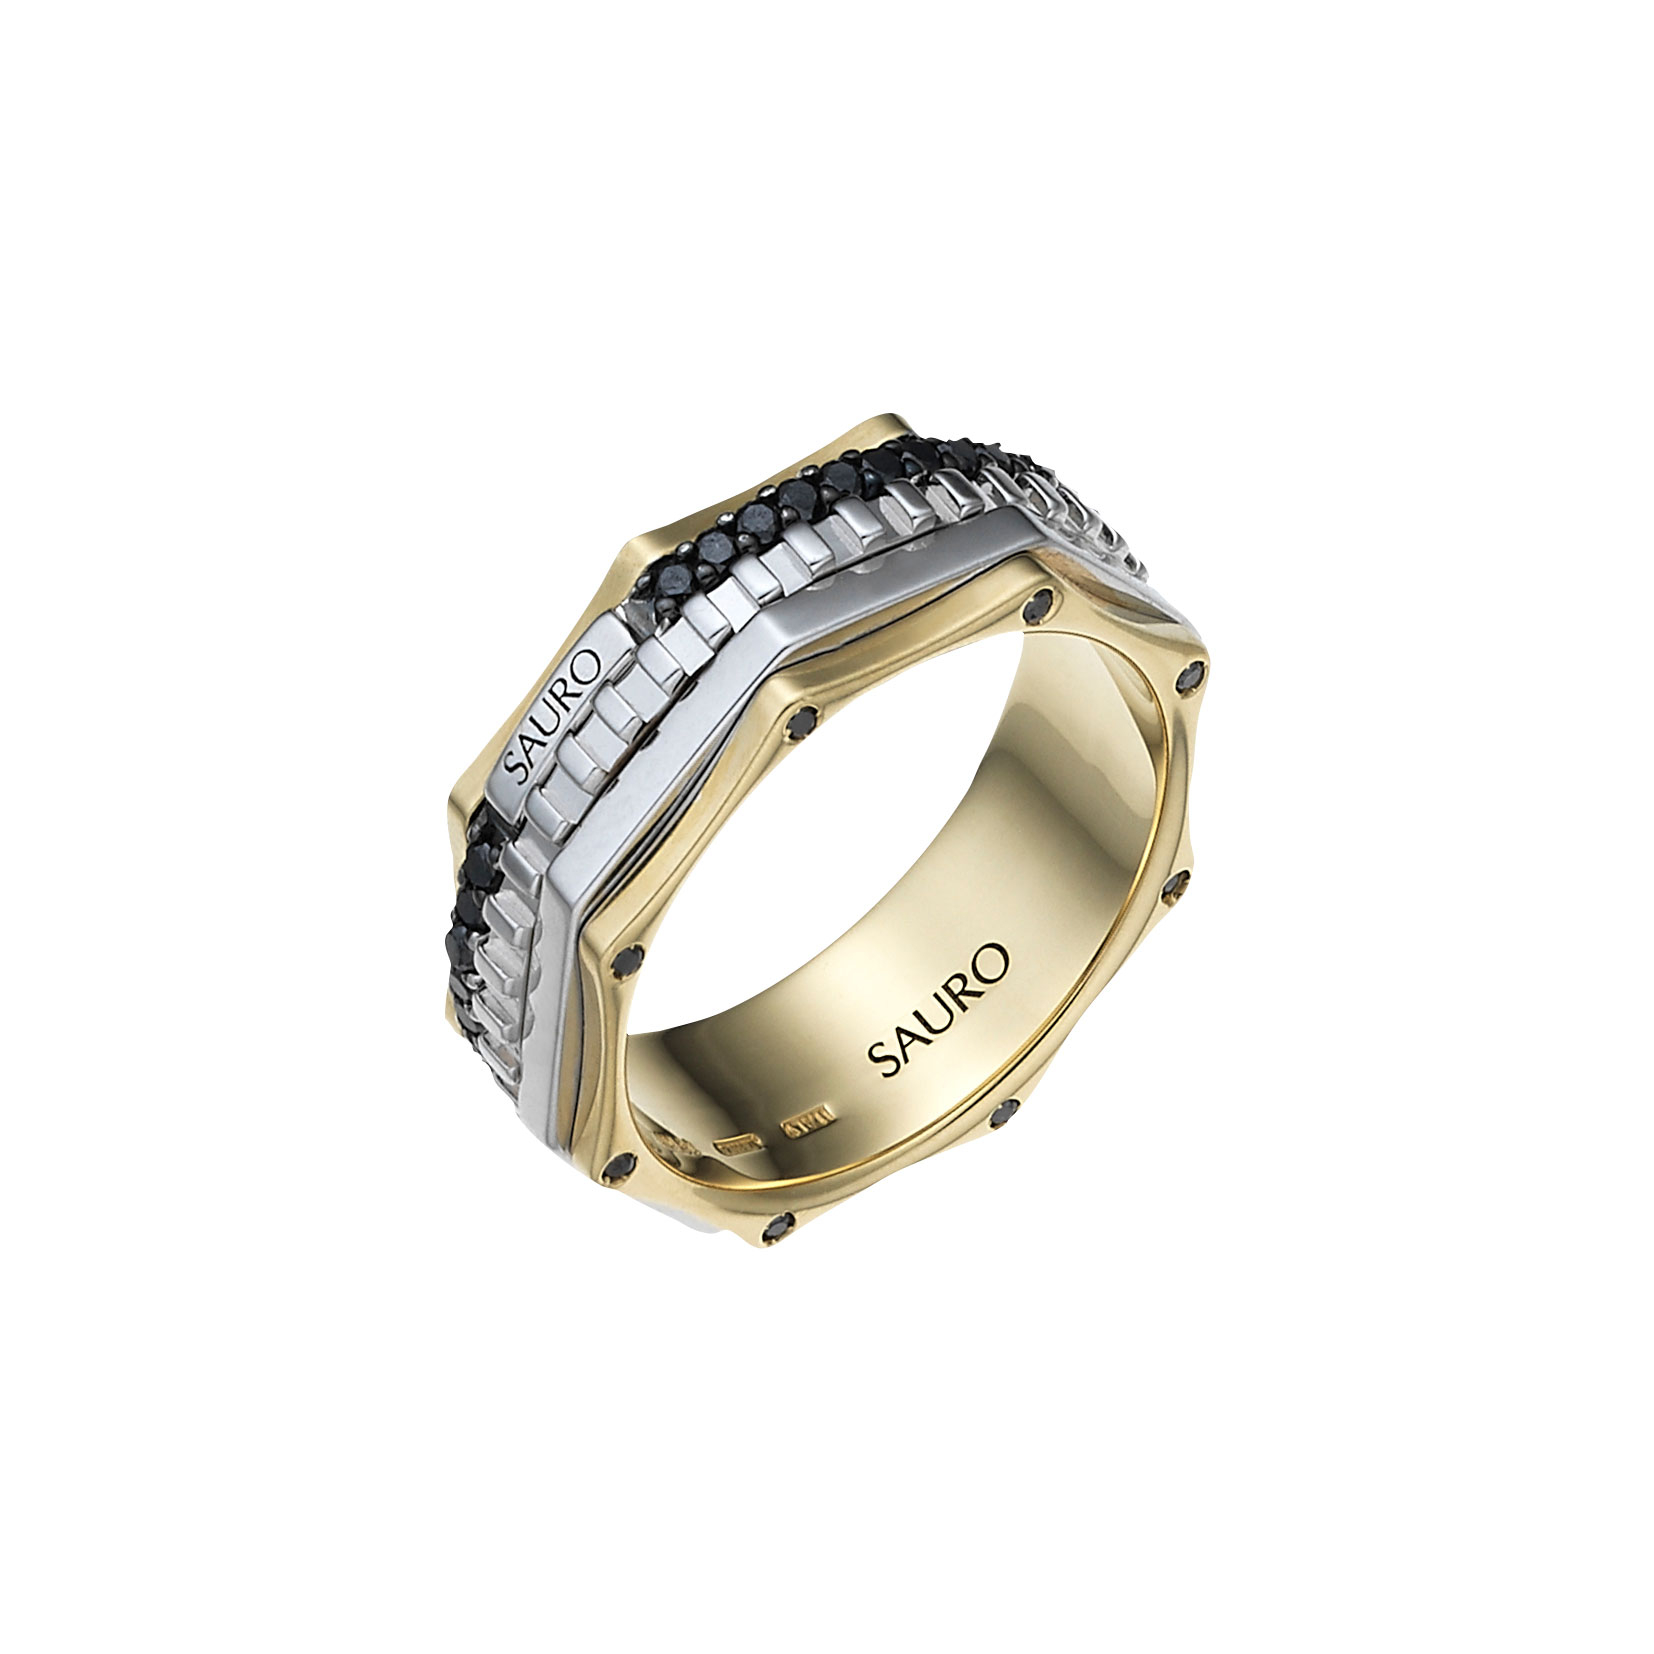 Buy KISNA Real Diamond Jewellery 14KT Rose Gold SI Diamond Ring for Men |  Him S7 at Amazon.in